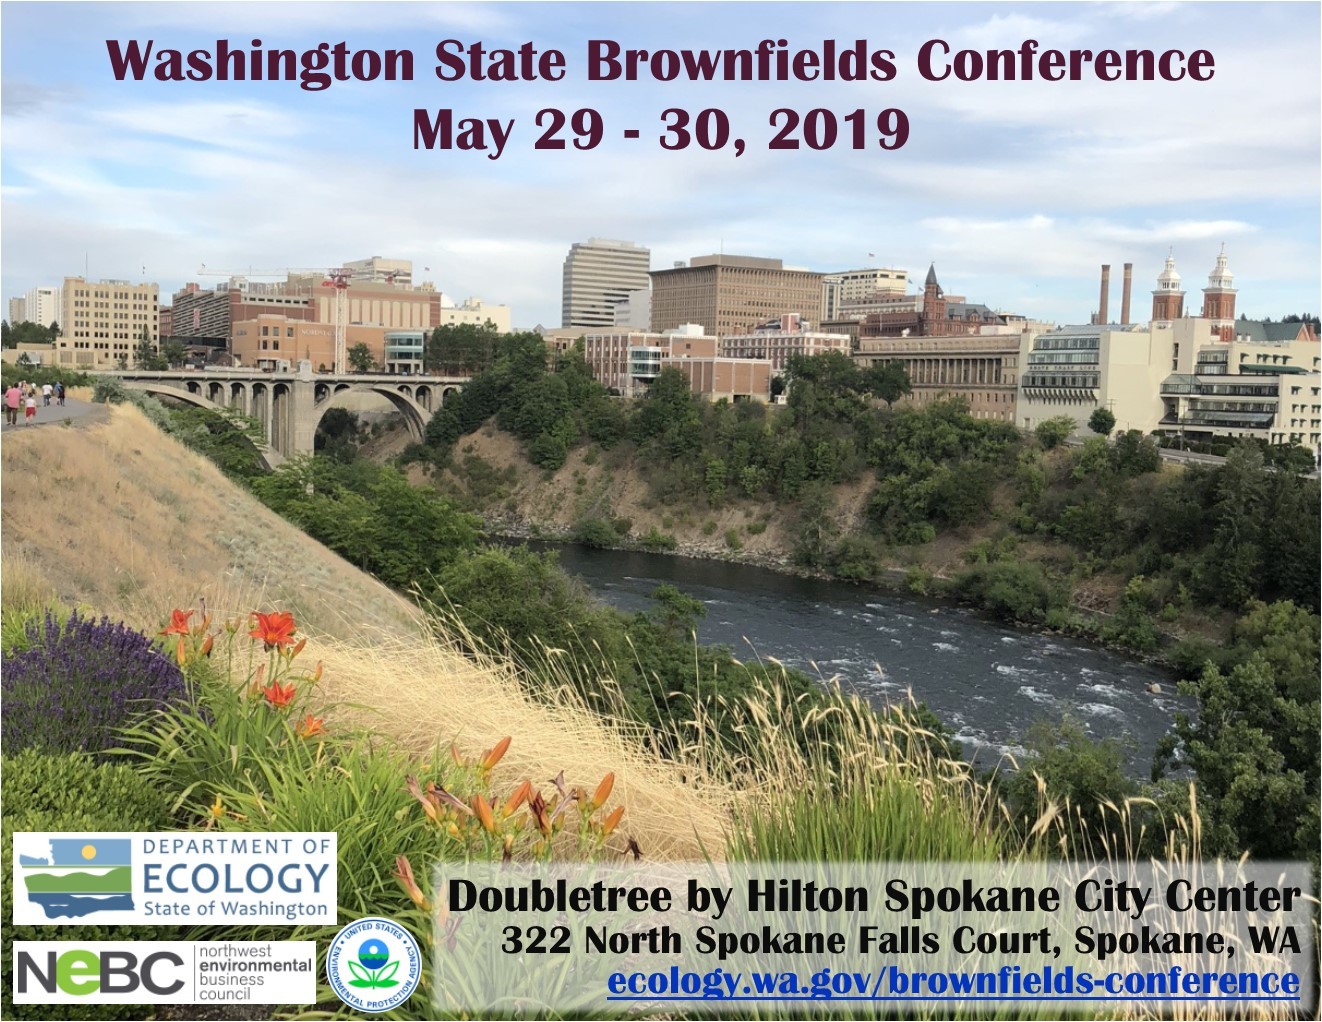 Postcard that says: Washington Brownfields Conference, May 29-30, 2019 at the Doubletree by Hilton Spokane Center, 322 North Spokane Falls Court, Spokane